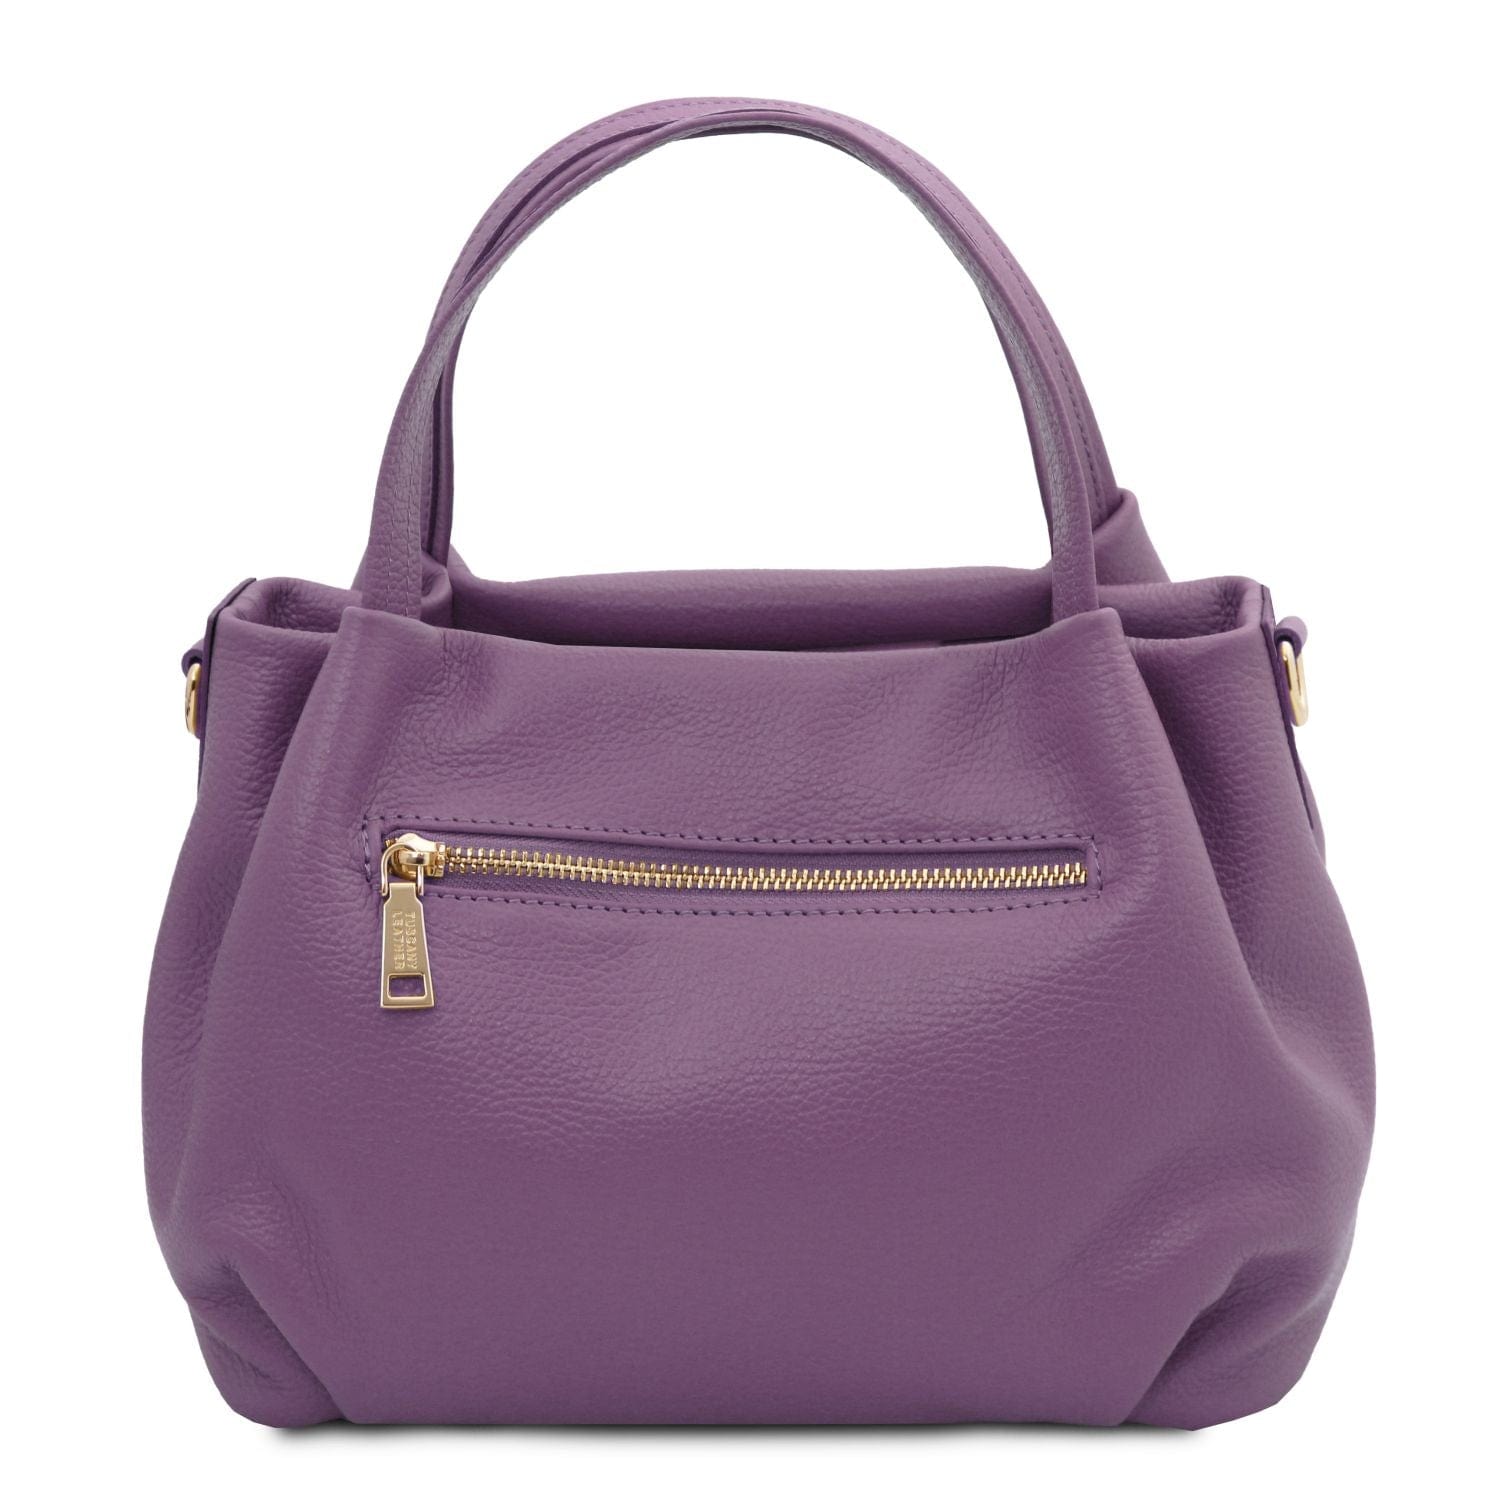 Nora - Soft leather handbag | TL142372 - Premium Leather handbags - Shop now at San Rocco Italia